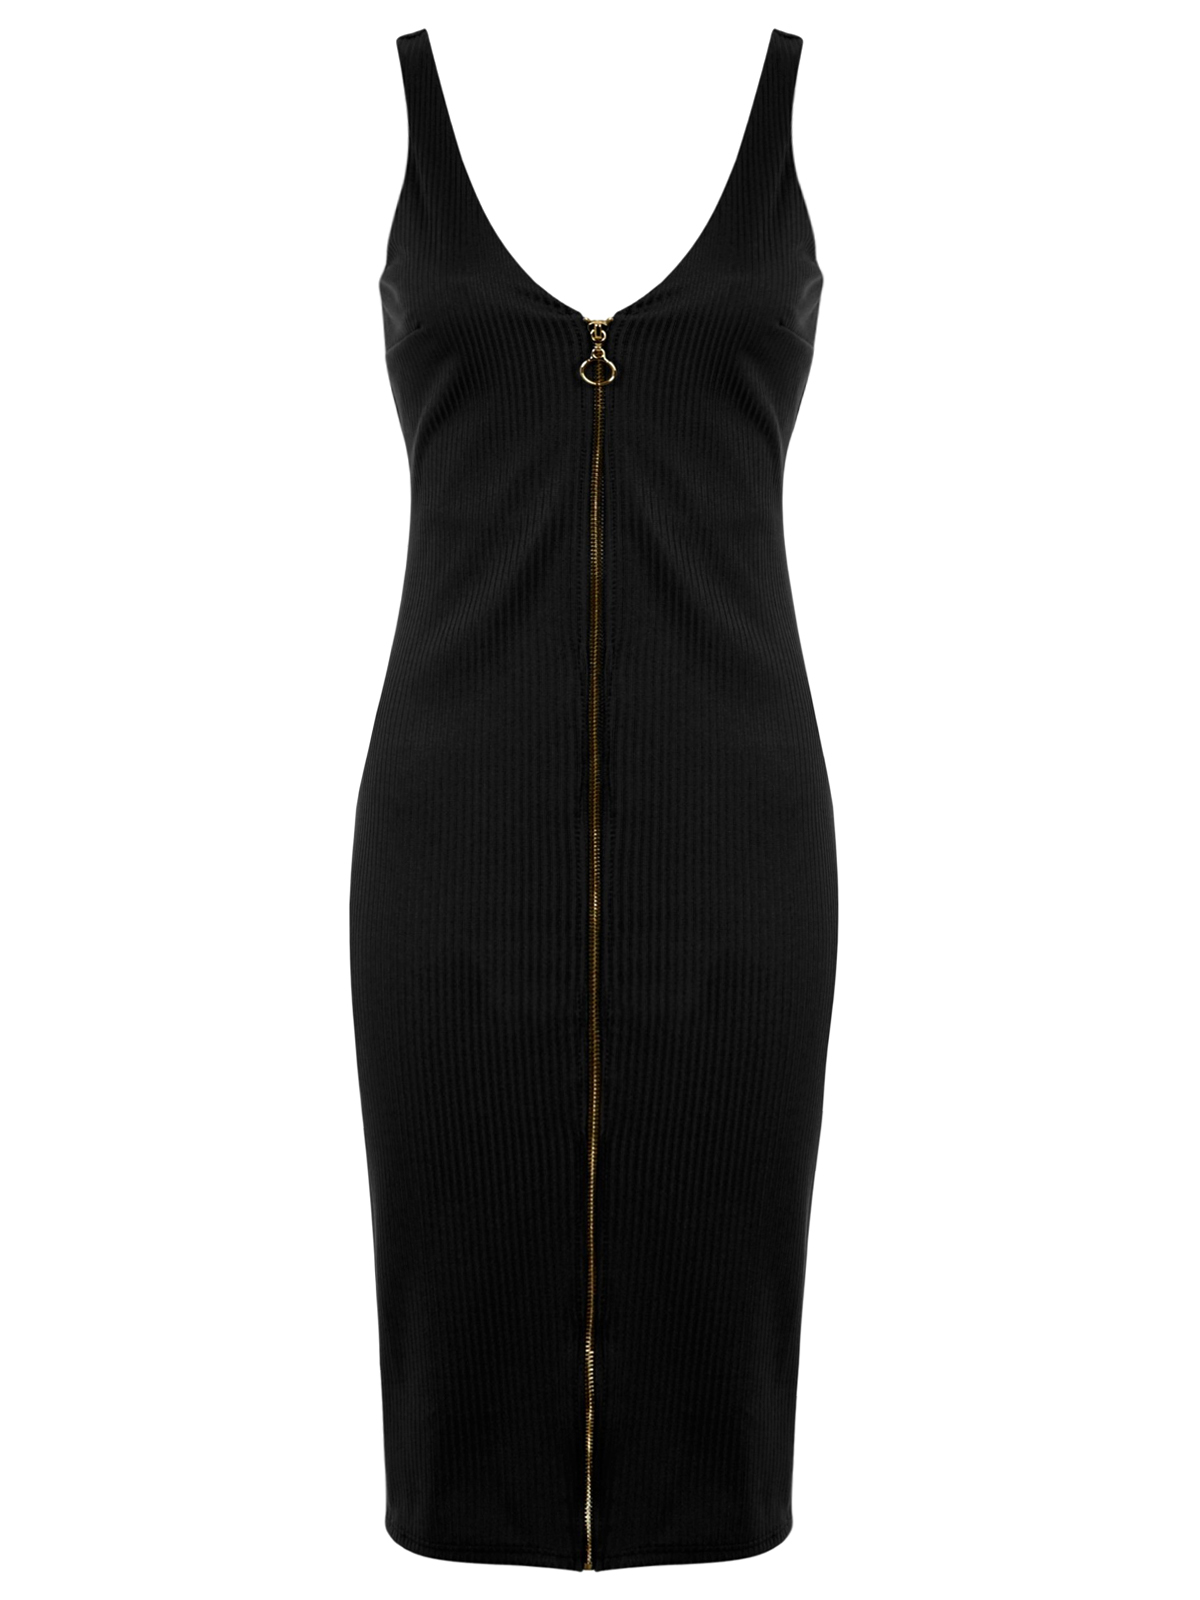 Miss Selfridge - - M1ss S3lfridge BLACK Ribbed Zip Front Dress - Size 8 ...